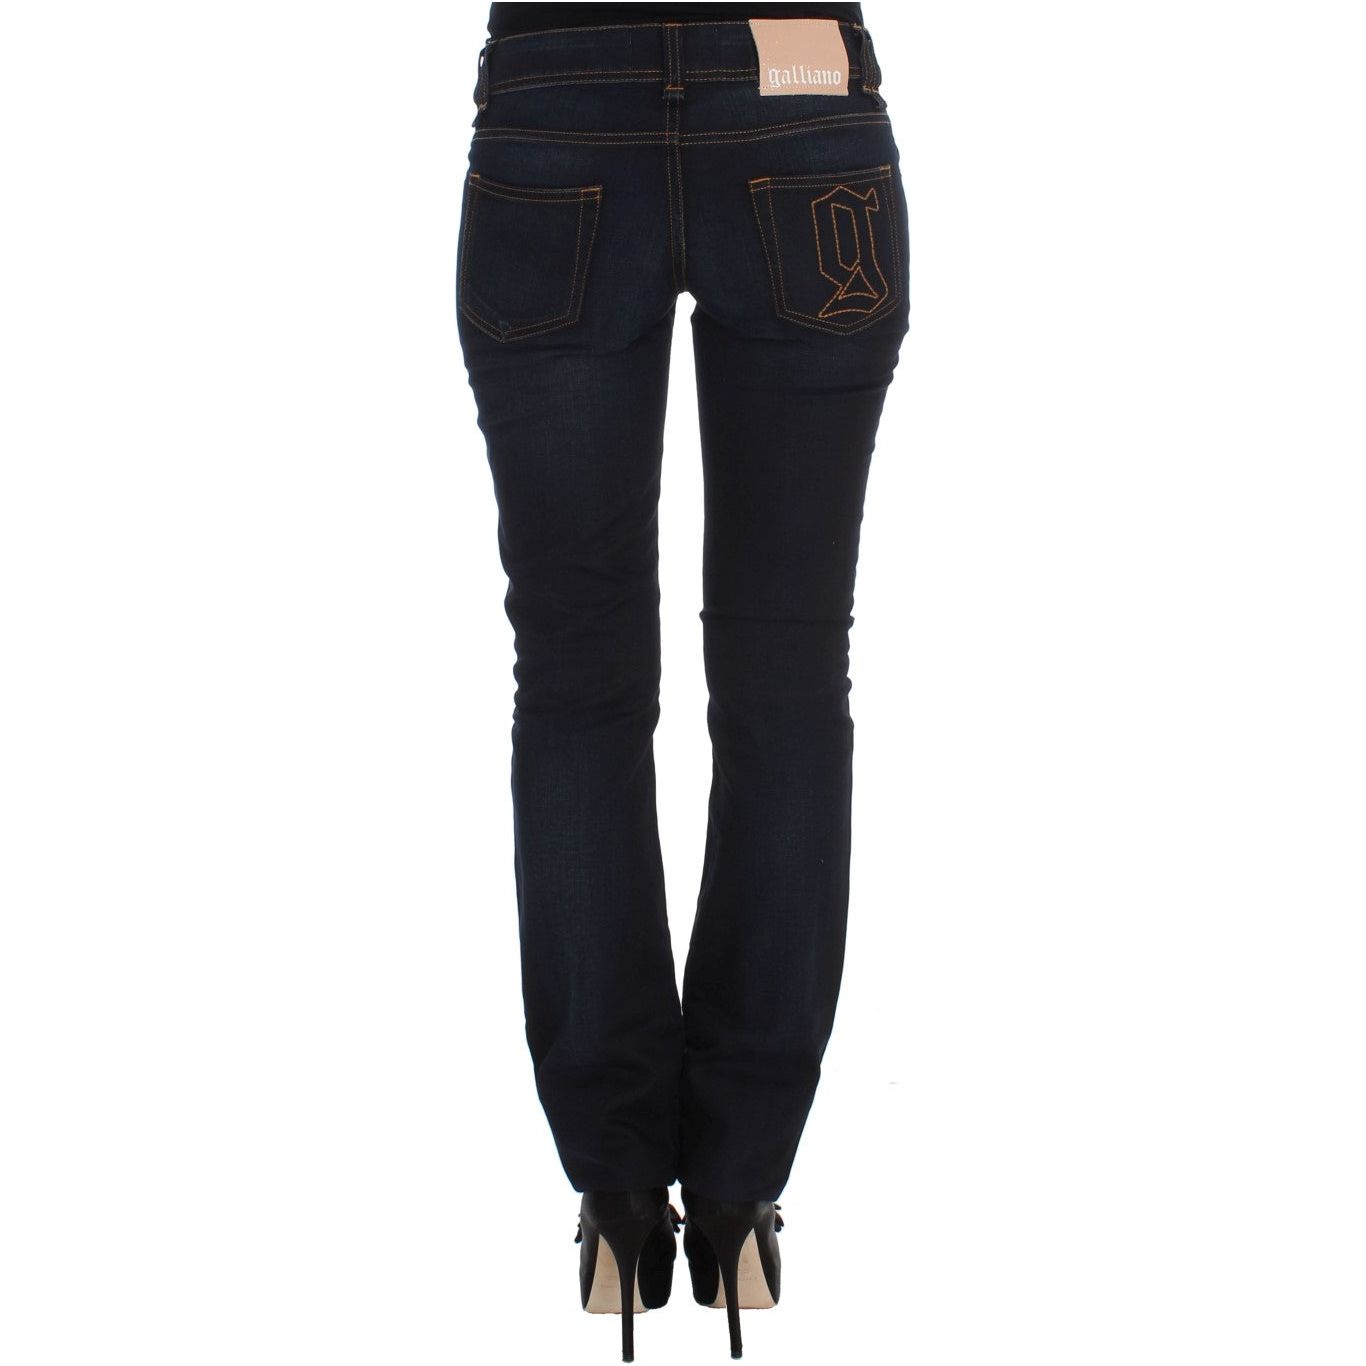 John Galliano Elegant Slim Fit Designer Jeans blue-wash-cotton-slim-fit-jeans-1 329959-blue-wash-cotton-slim-fit-jeans-2-2.jpg